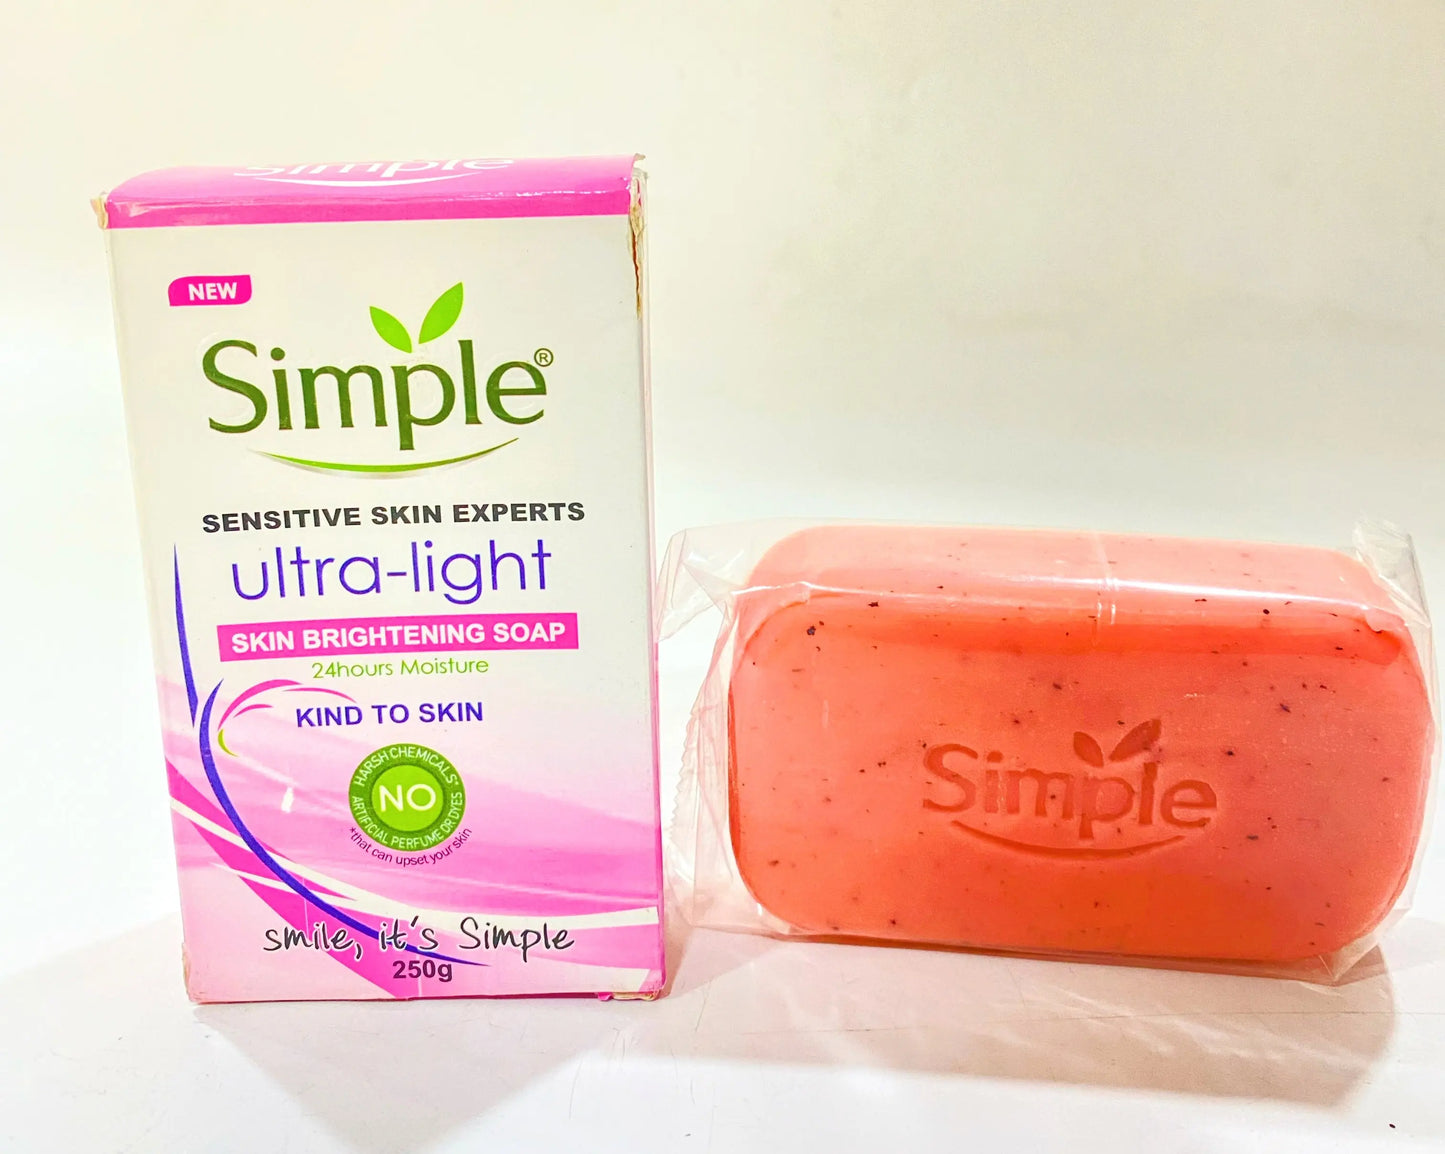 Simple sensitive skin Experts ultra-light. Kind to skin Soap La Mimz Beauty & Fashion Store